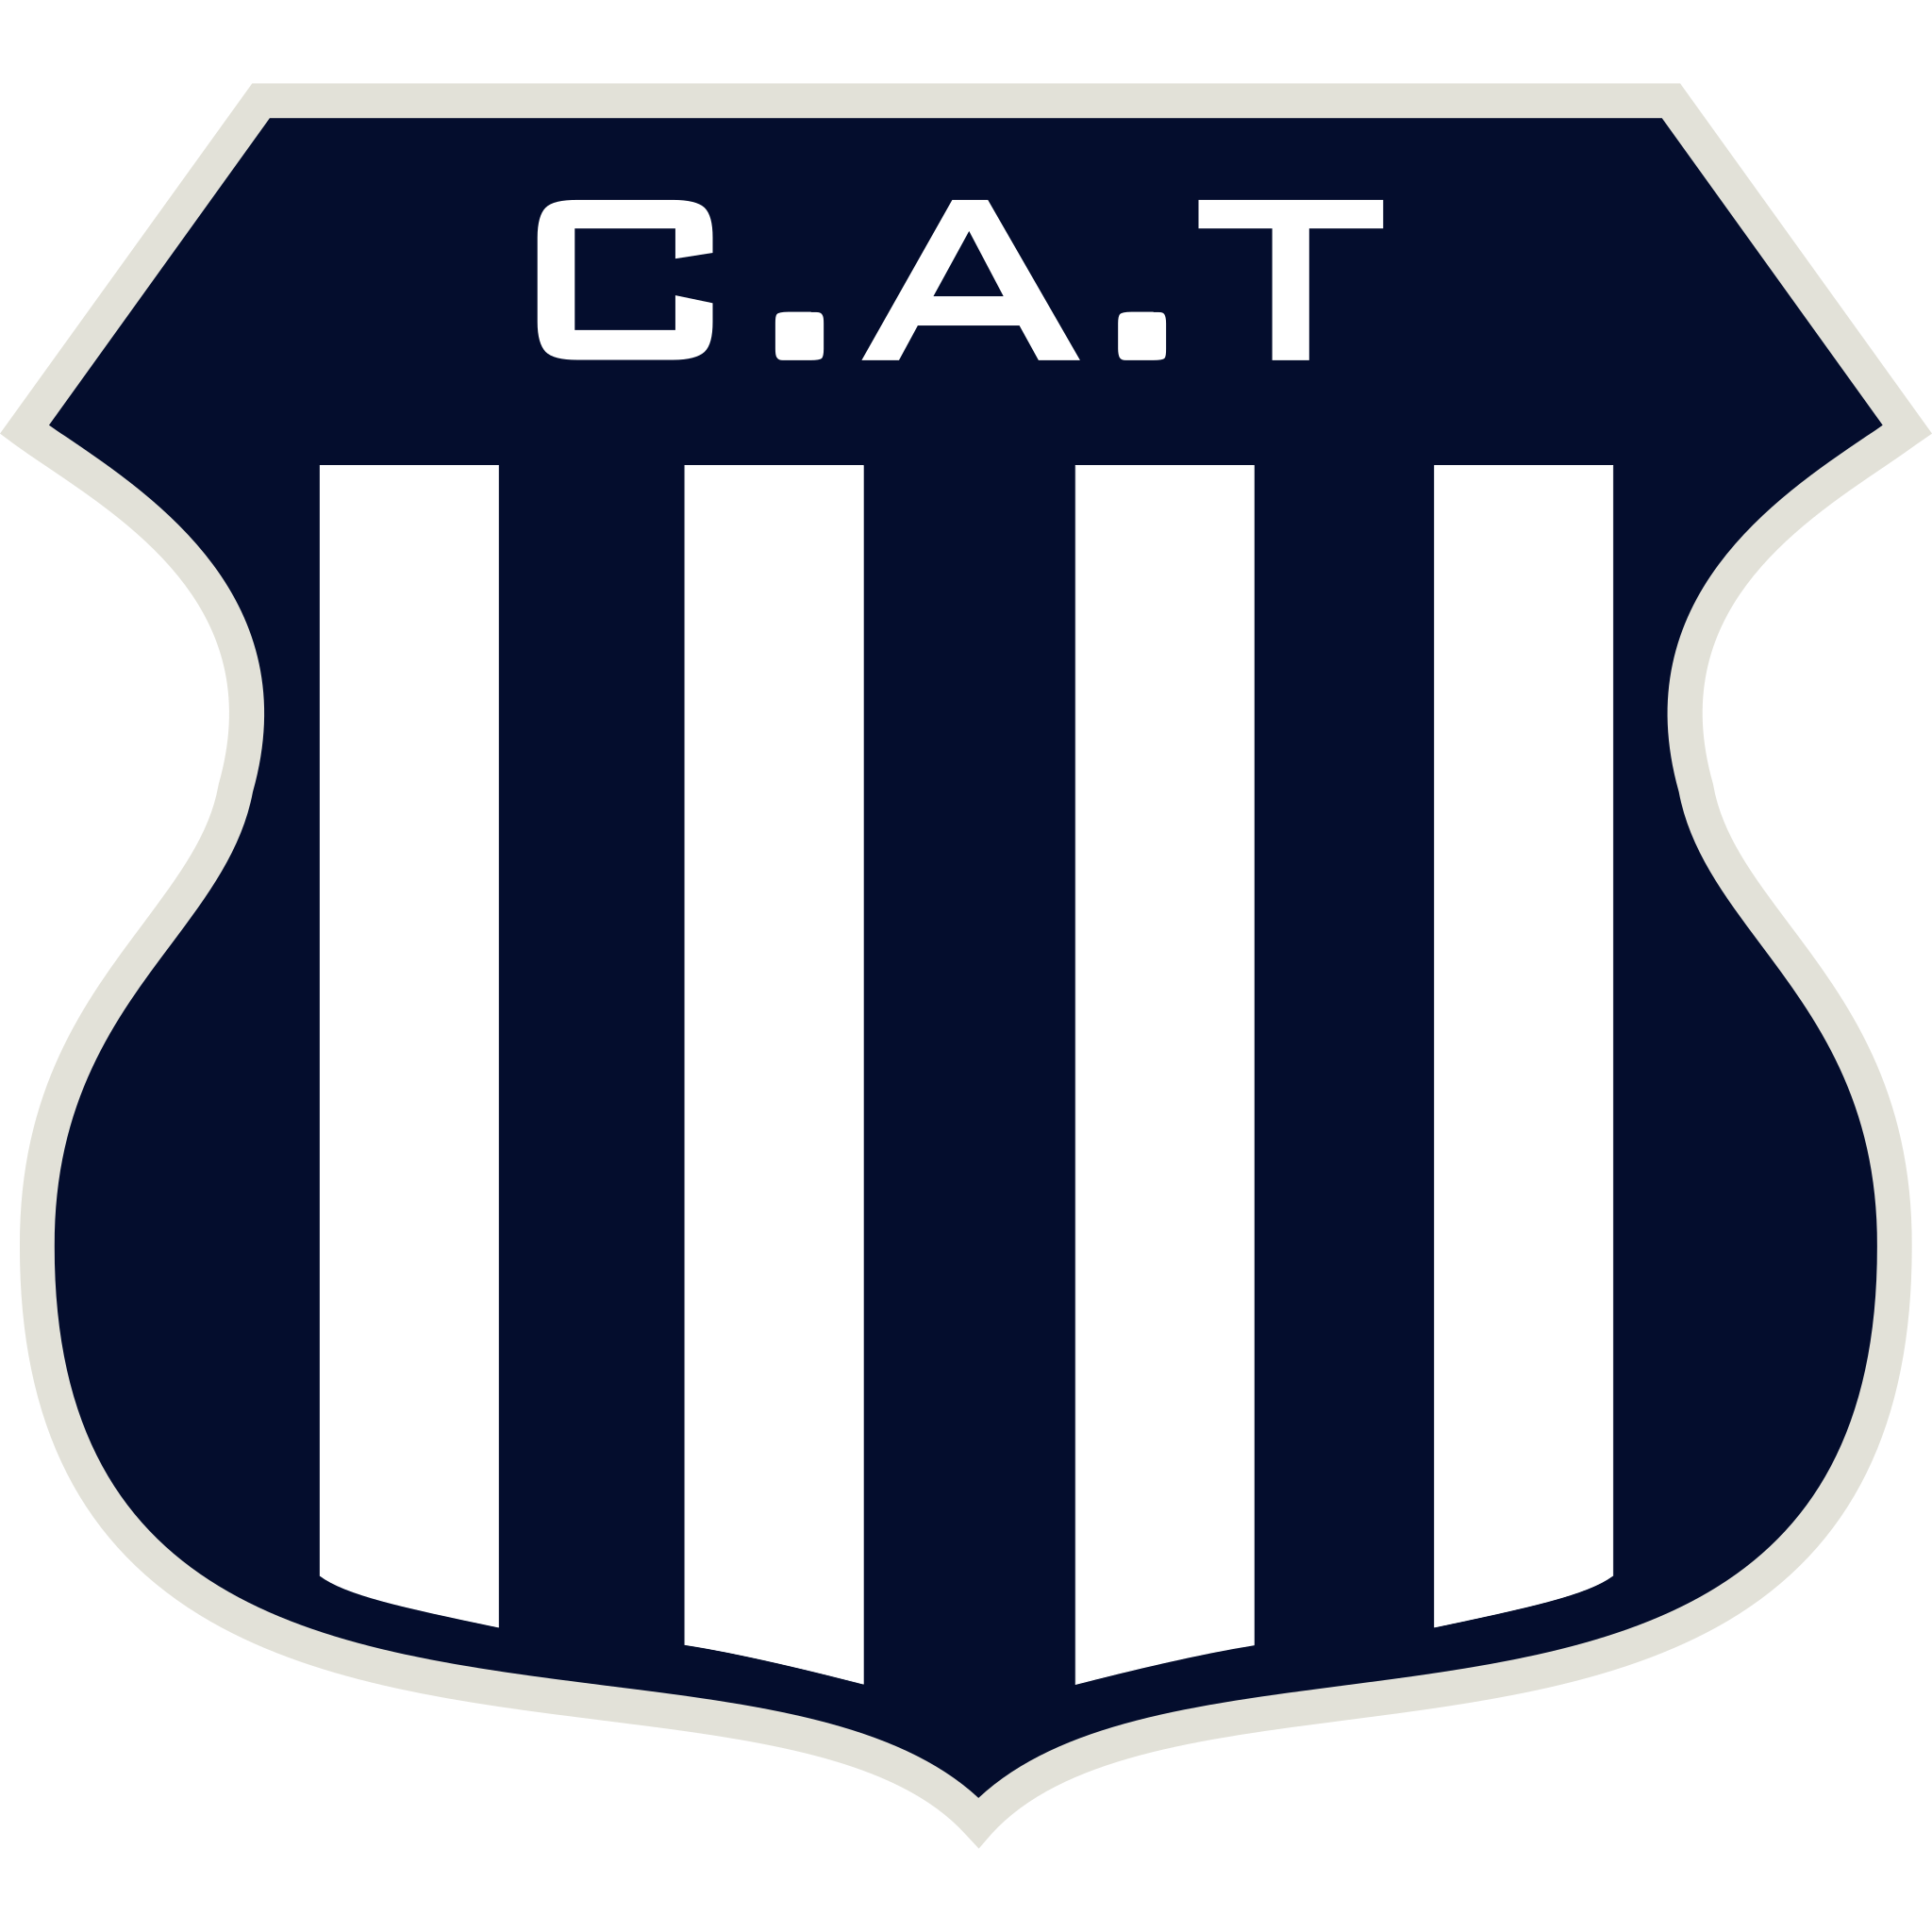 Reserva - Club Atlético Talleres